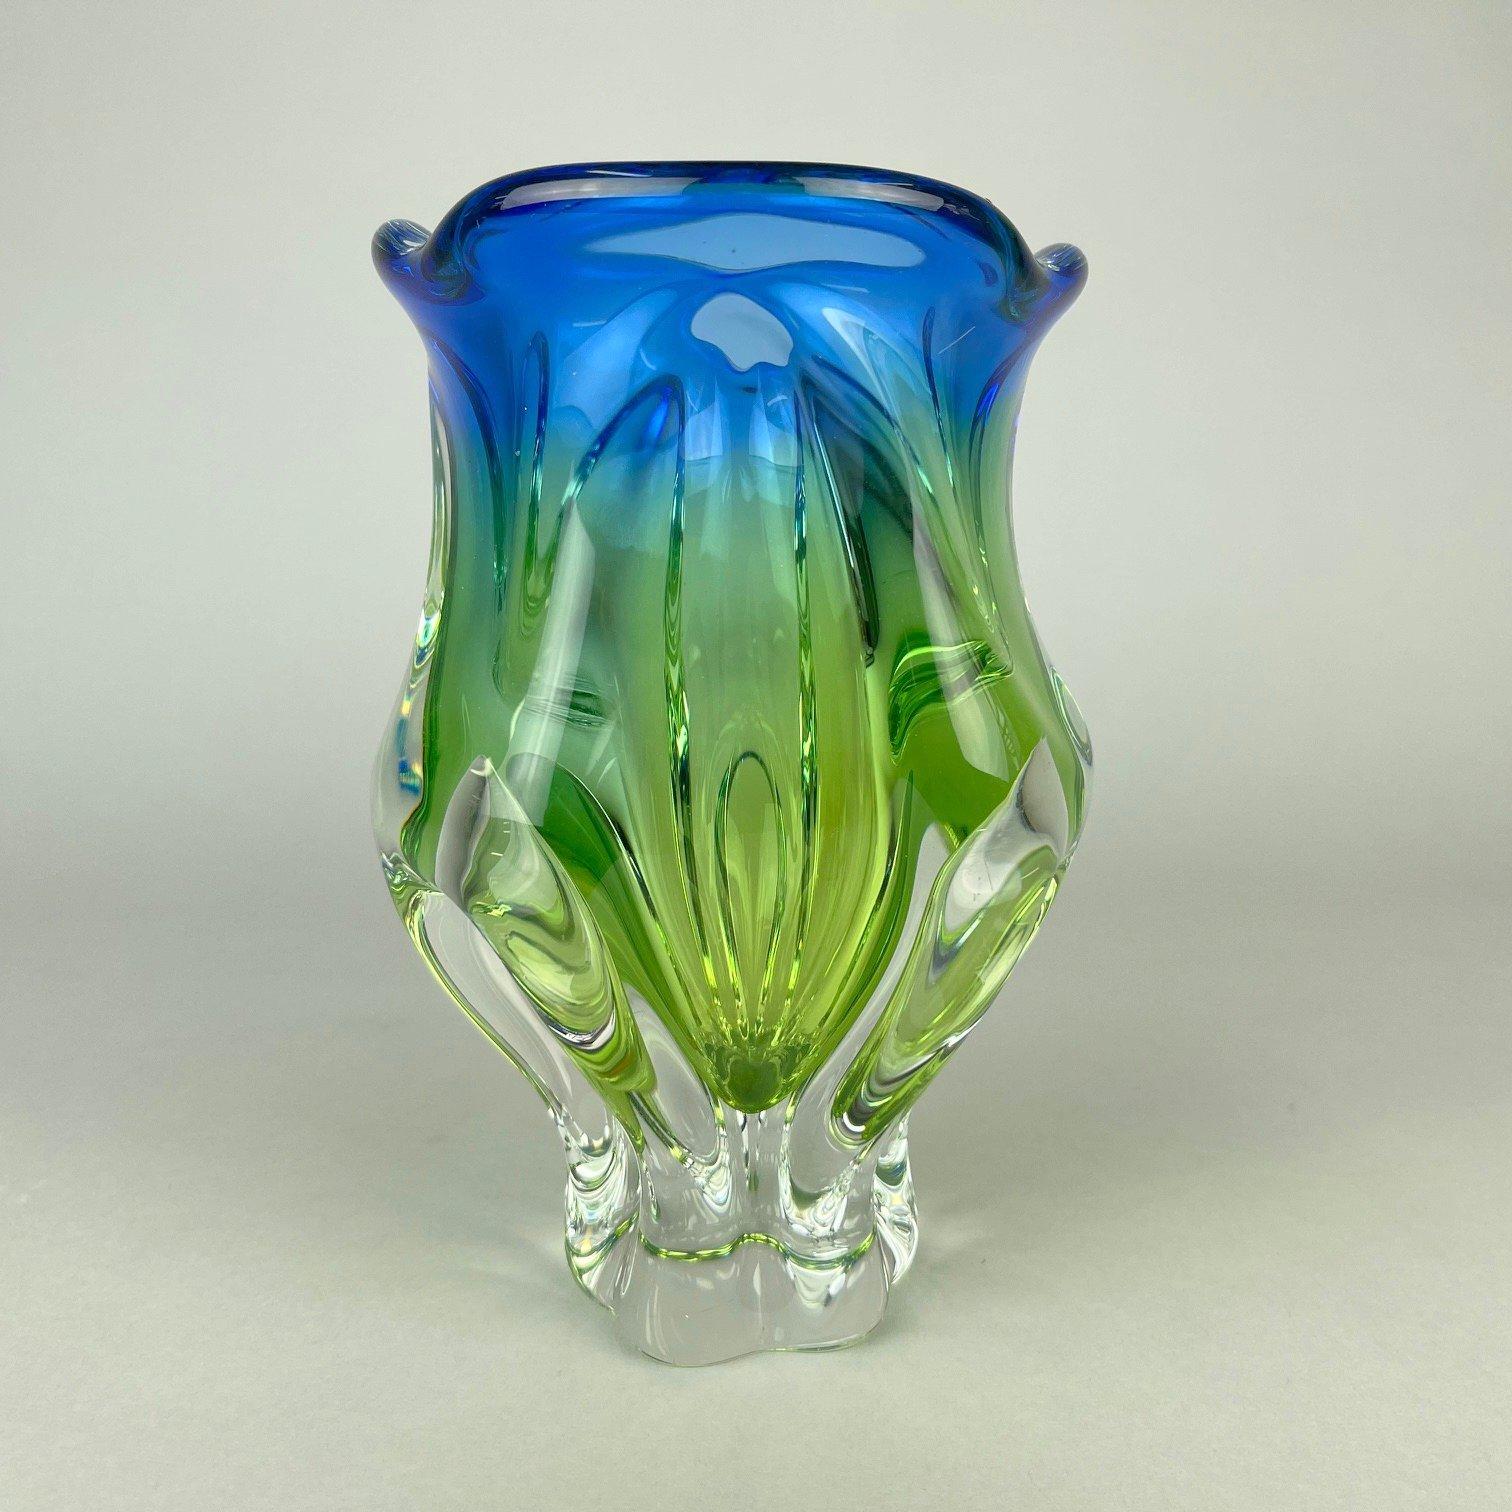 Bohemian, heavy, art glass vase designed by Josef Hospodka for Chribska glassworks in Czechoslovakia in the 1960's.